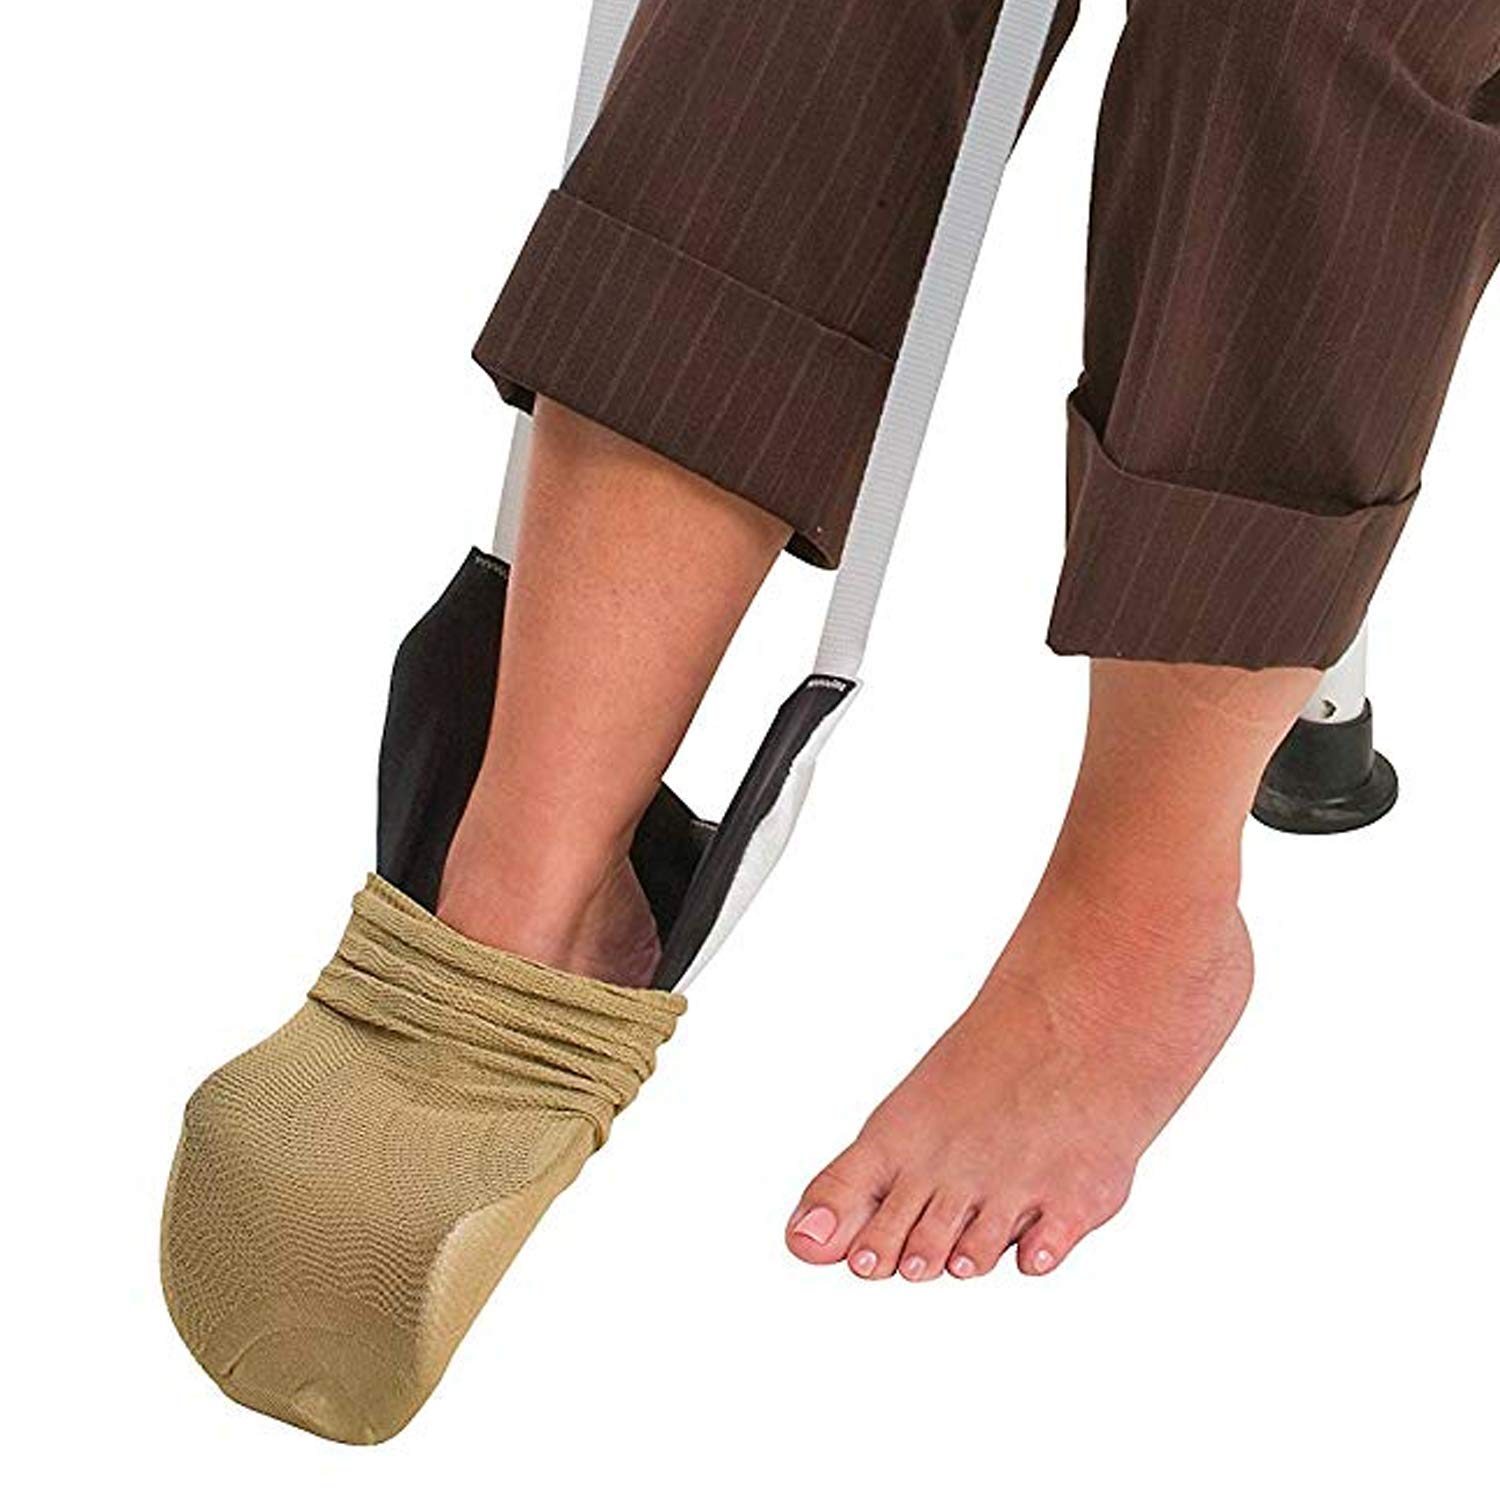 DMI Deluxe Sock Aid / Helper - Easily Pull on Socks Without Bending, Slip Resistance, Reliable Sock Aid Device for Seniors, White